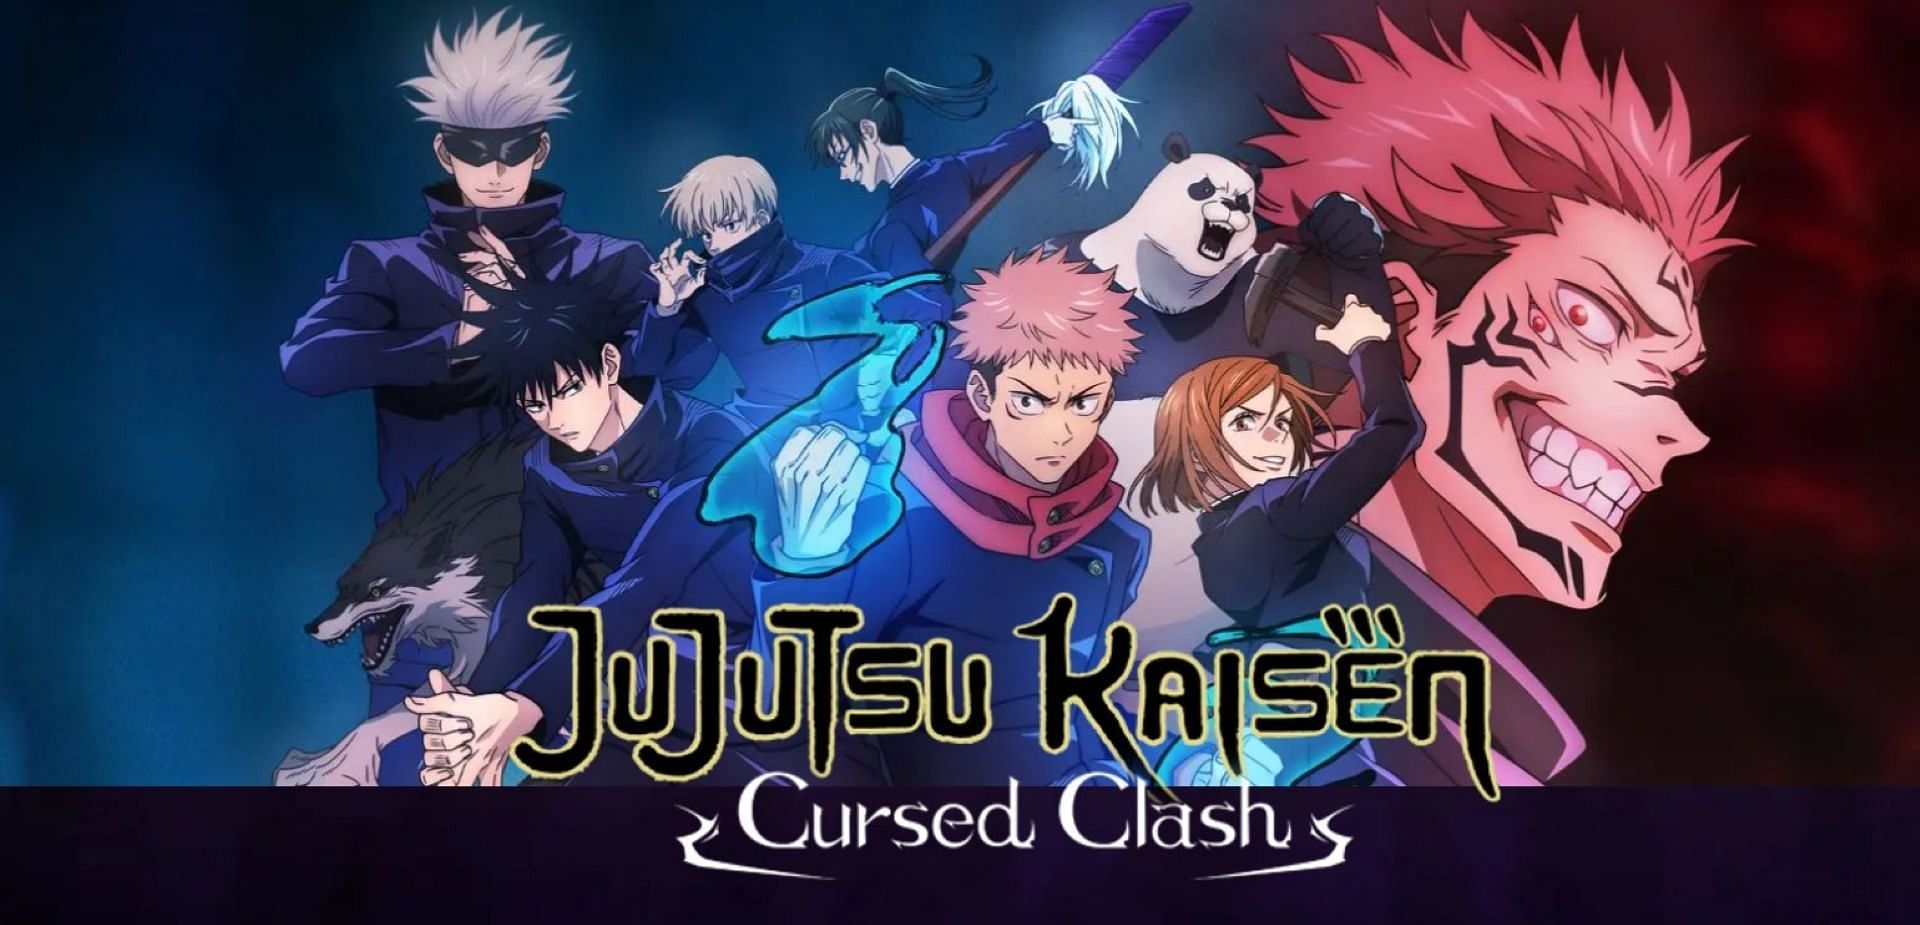 Jujutsu Kaisen Cursed Clash game (Image via Bandai Namco gaming studios)